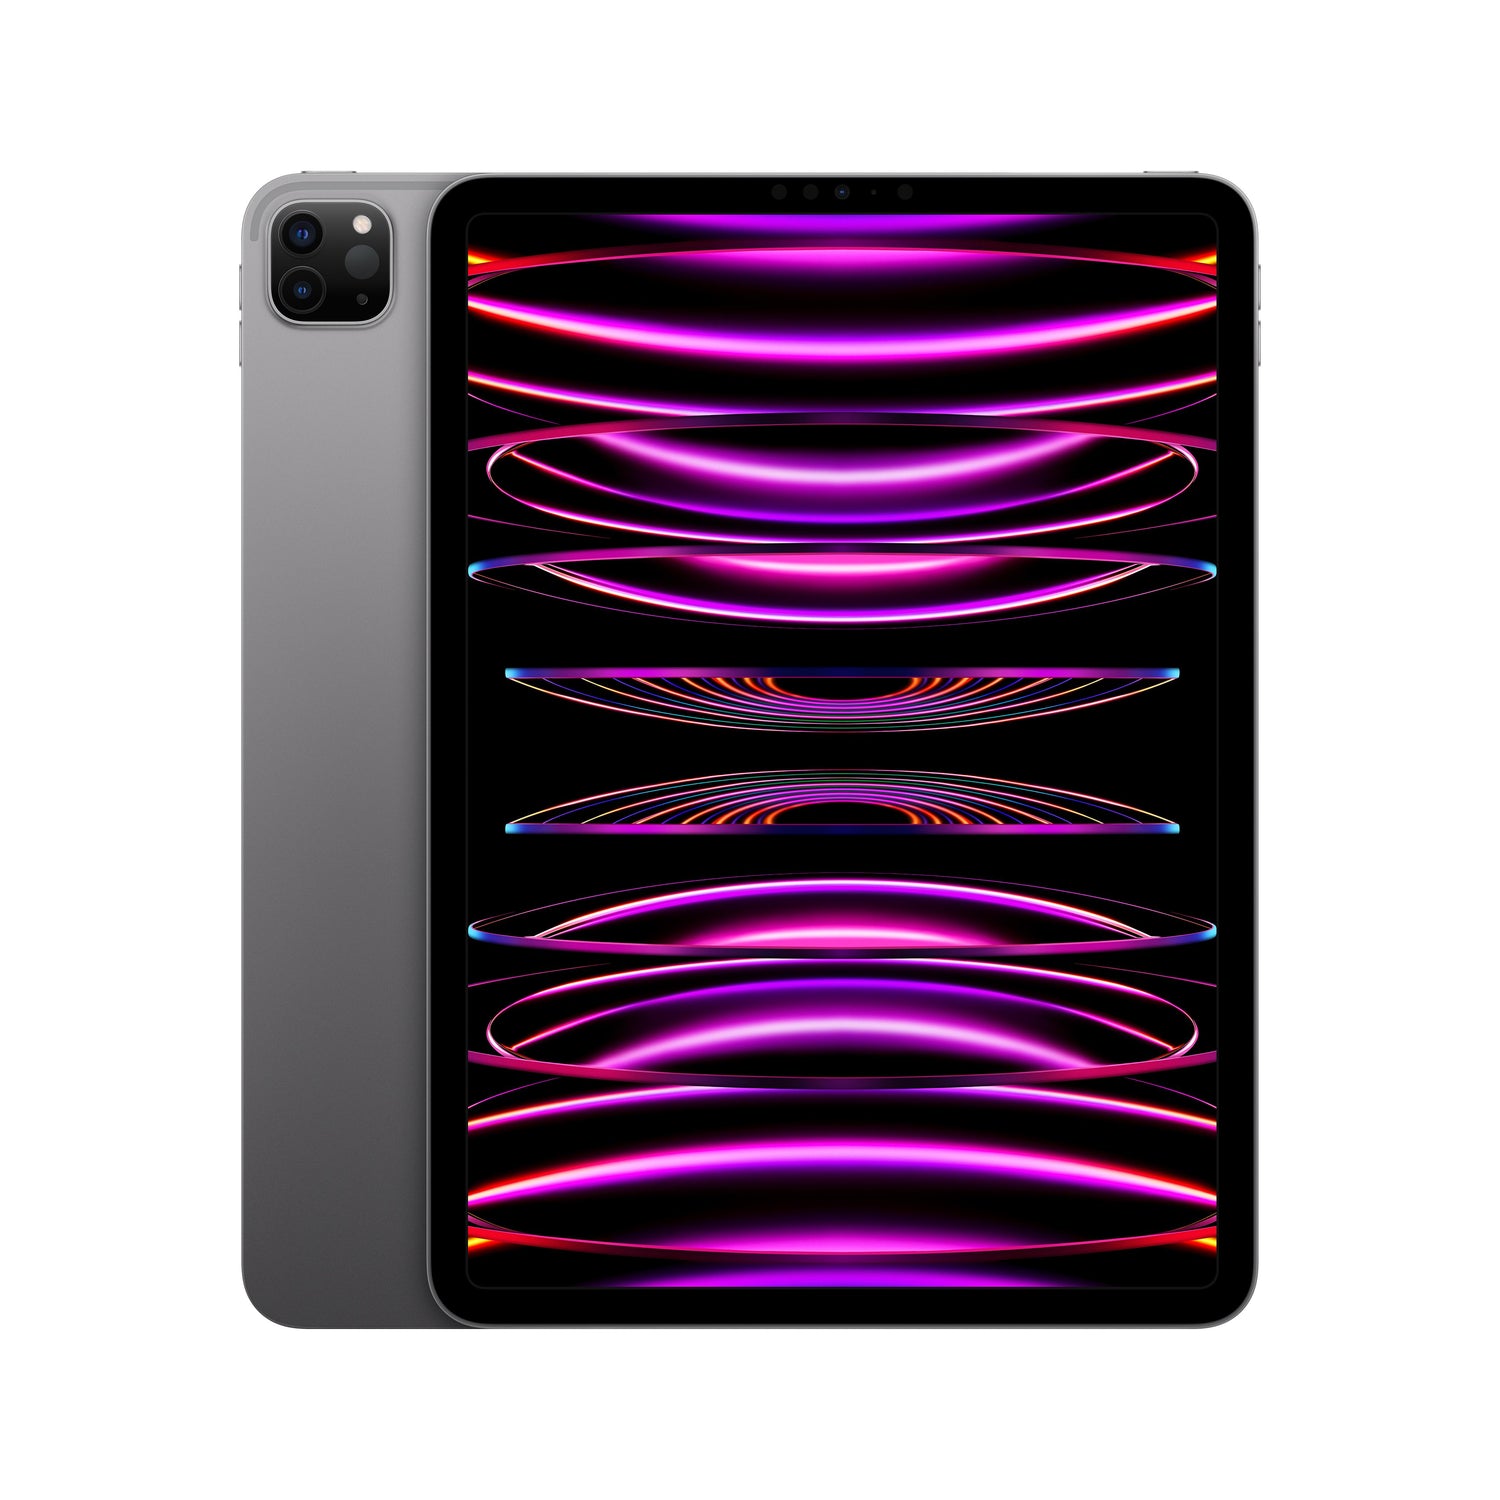 2022 12.9-inch iPad Pro Wi-Fi 128GB - Space Gray (6th generation)